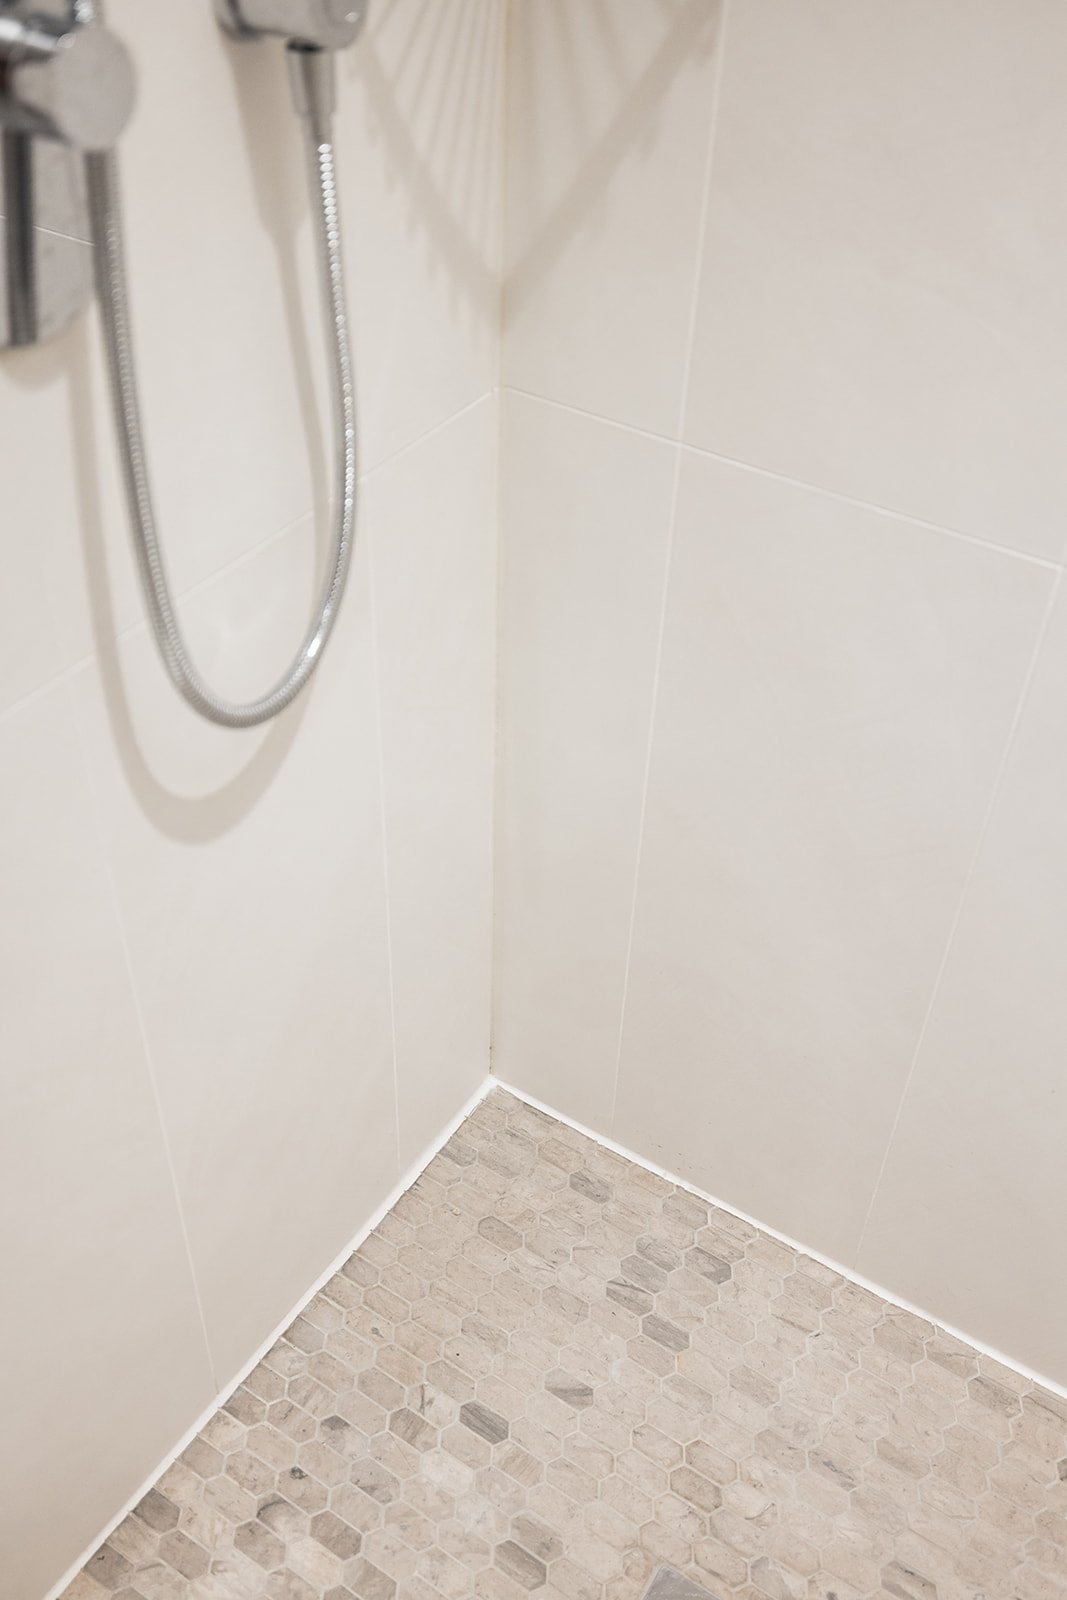 Shower floor tile details in Toronto bathroom renovation